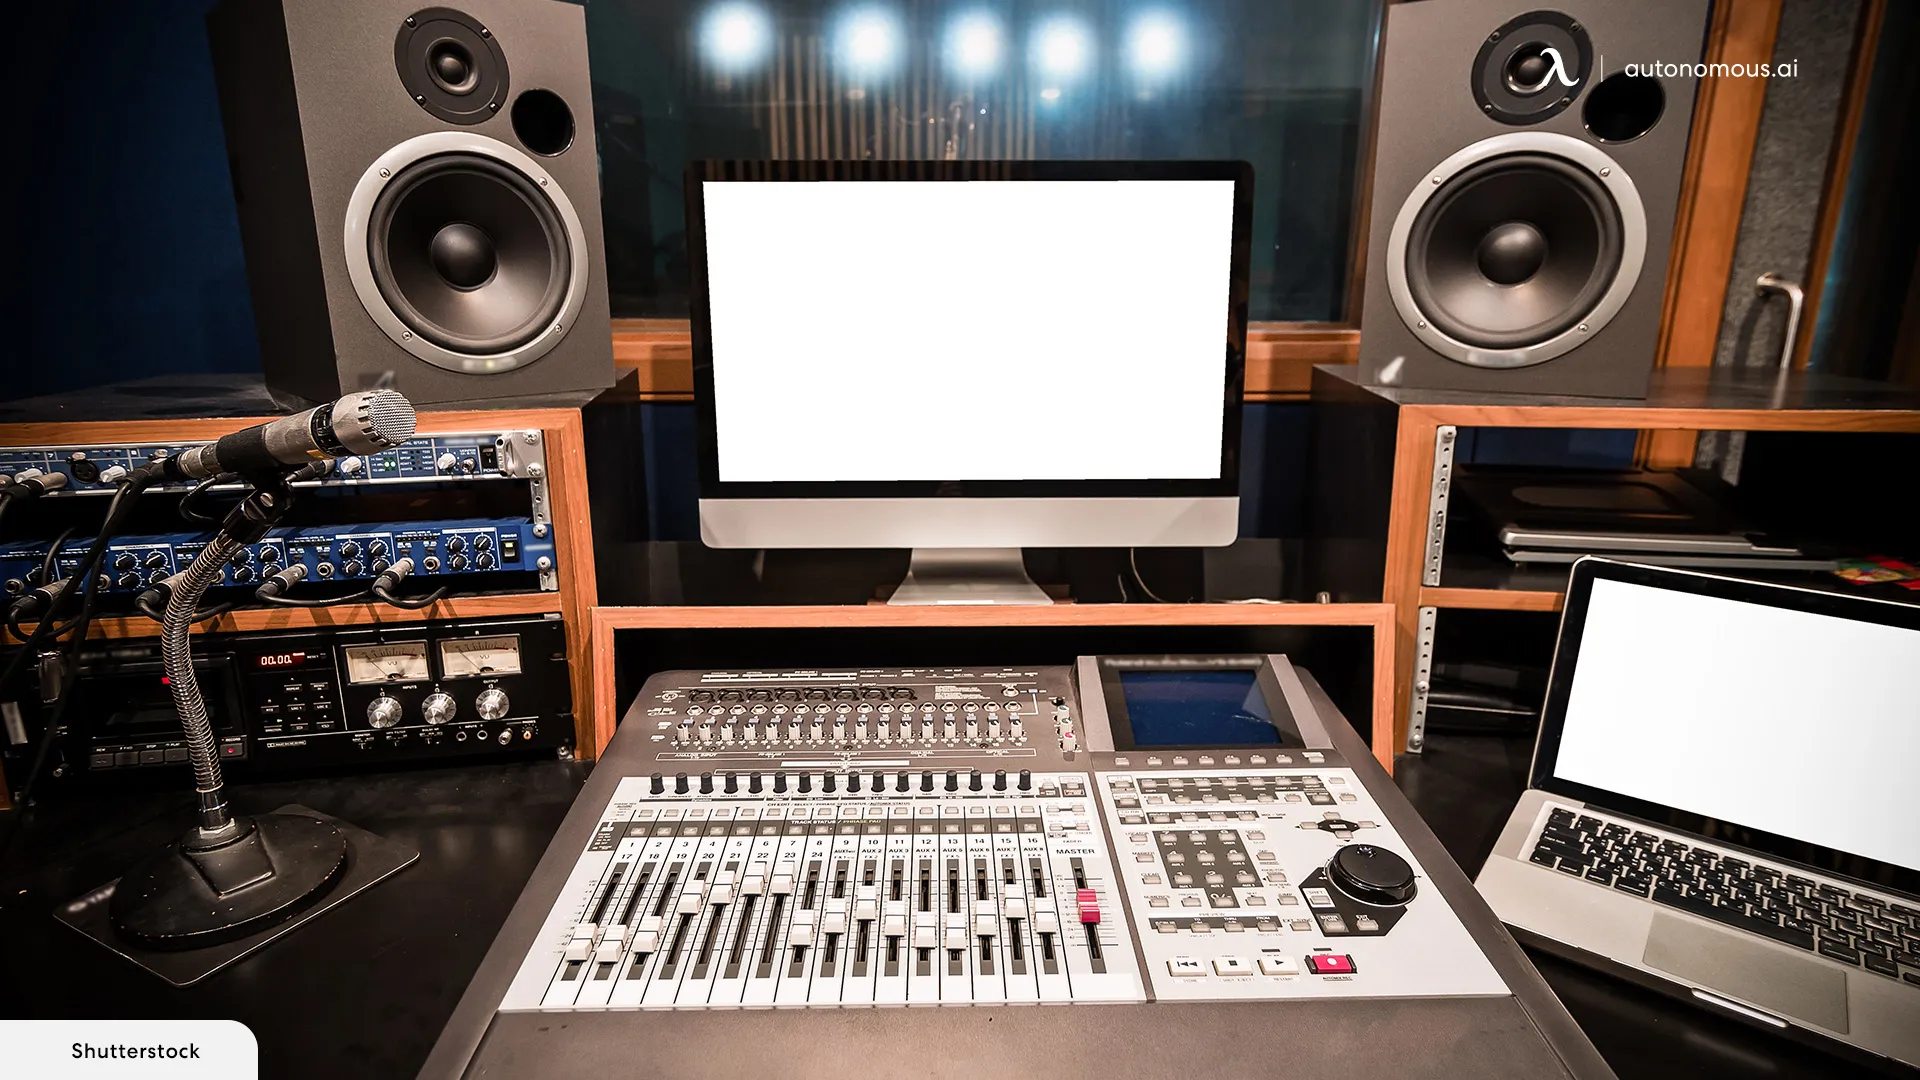 DIY Music Studio Desk - DIY studio desk